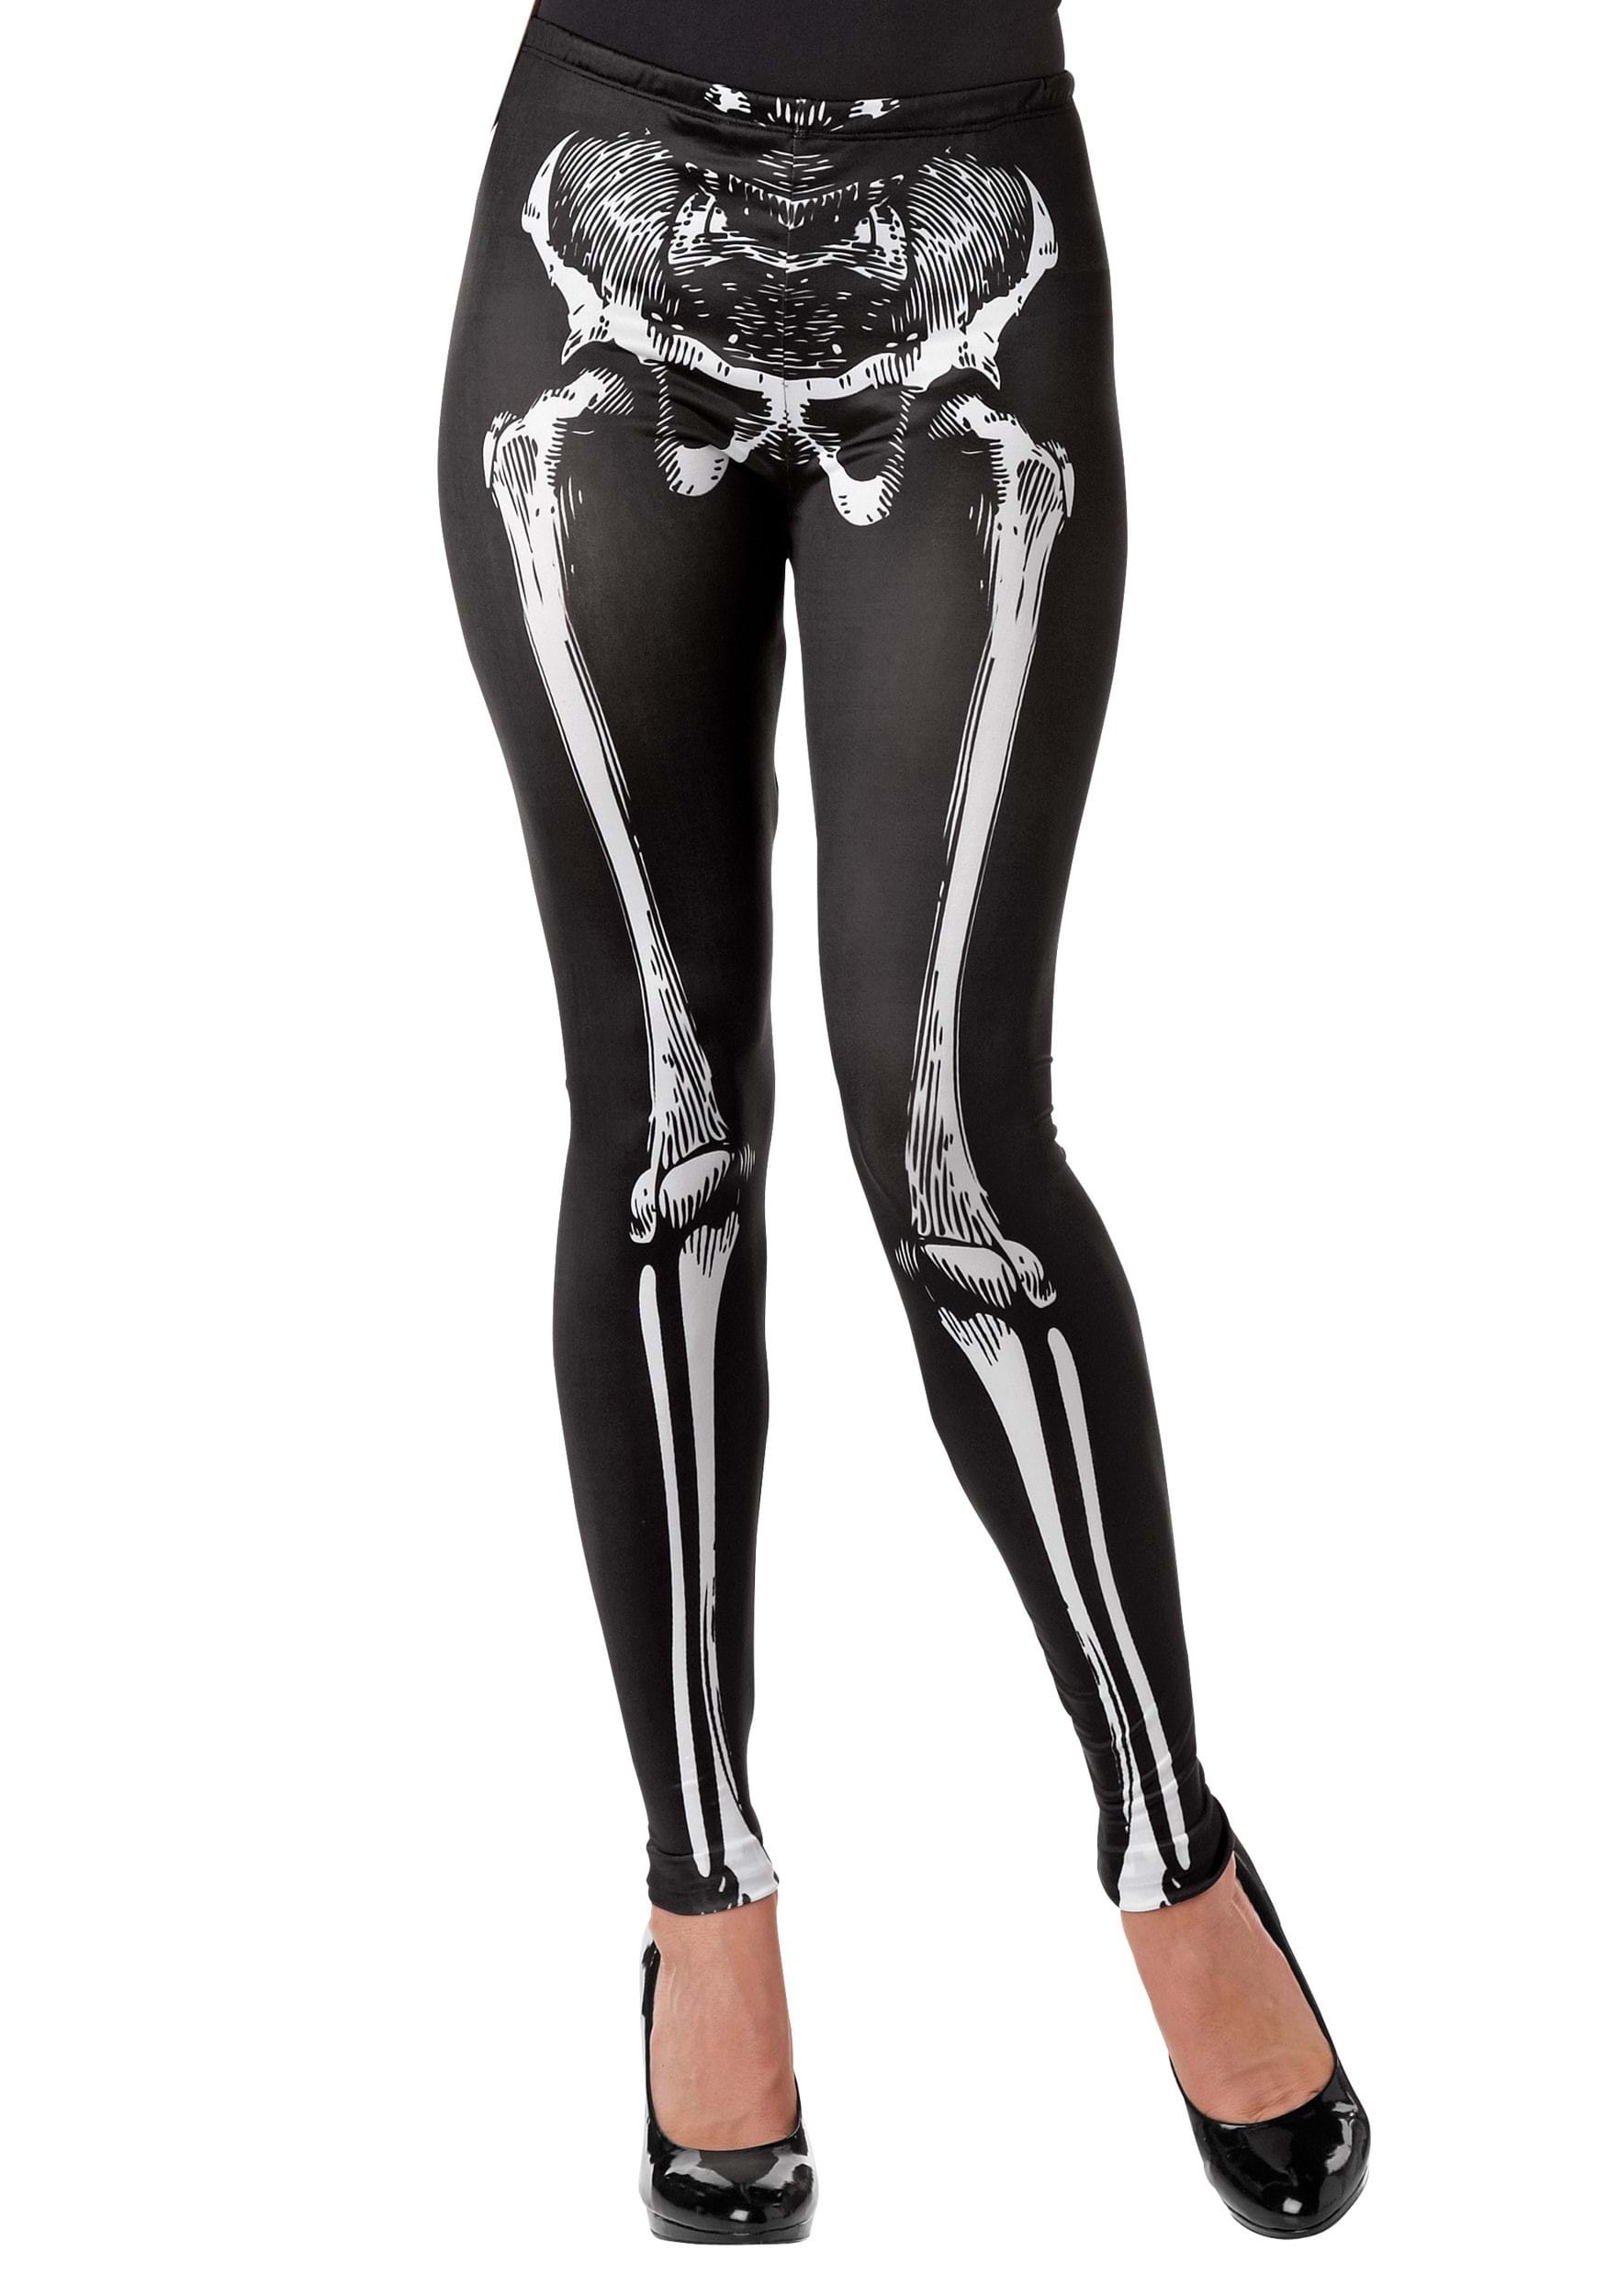 https://images.halloweencostumes.com/products/79811/1-1/womens-black-skeleton-leggings.jpg